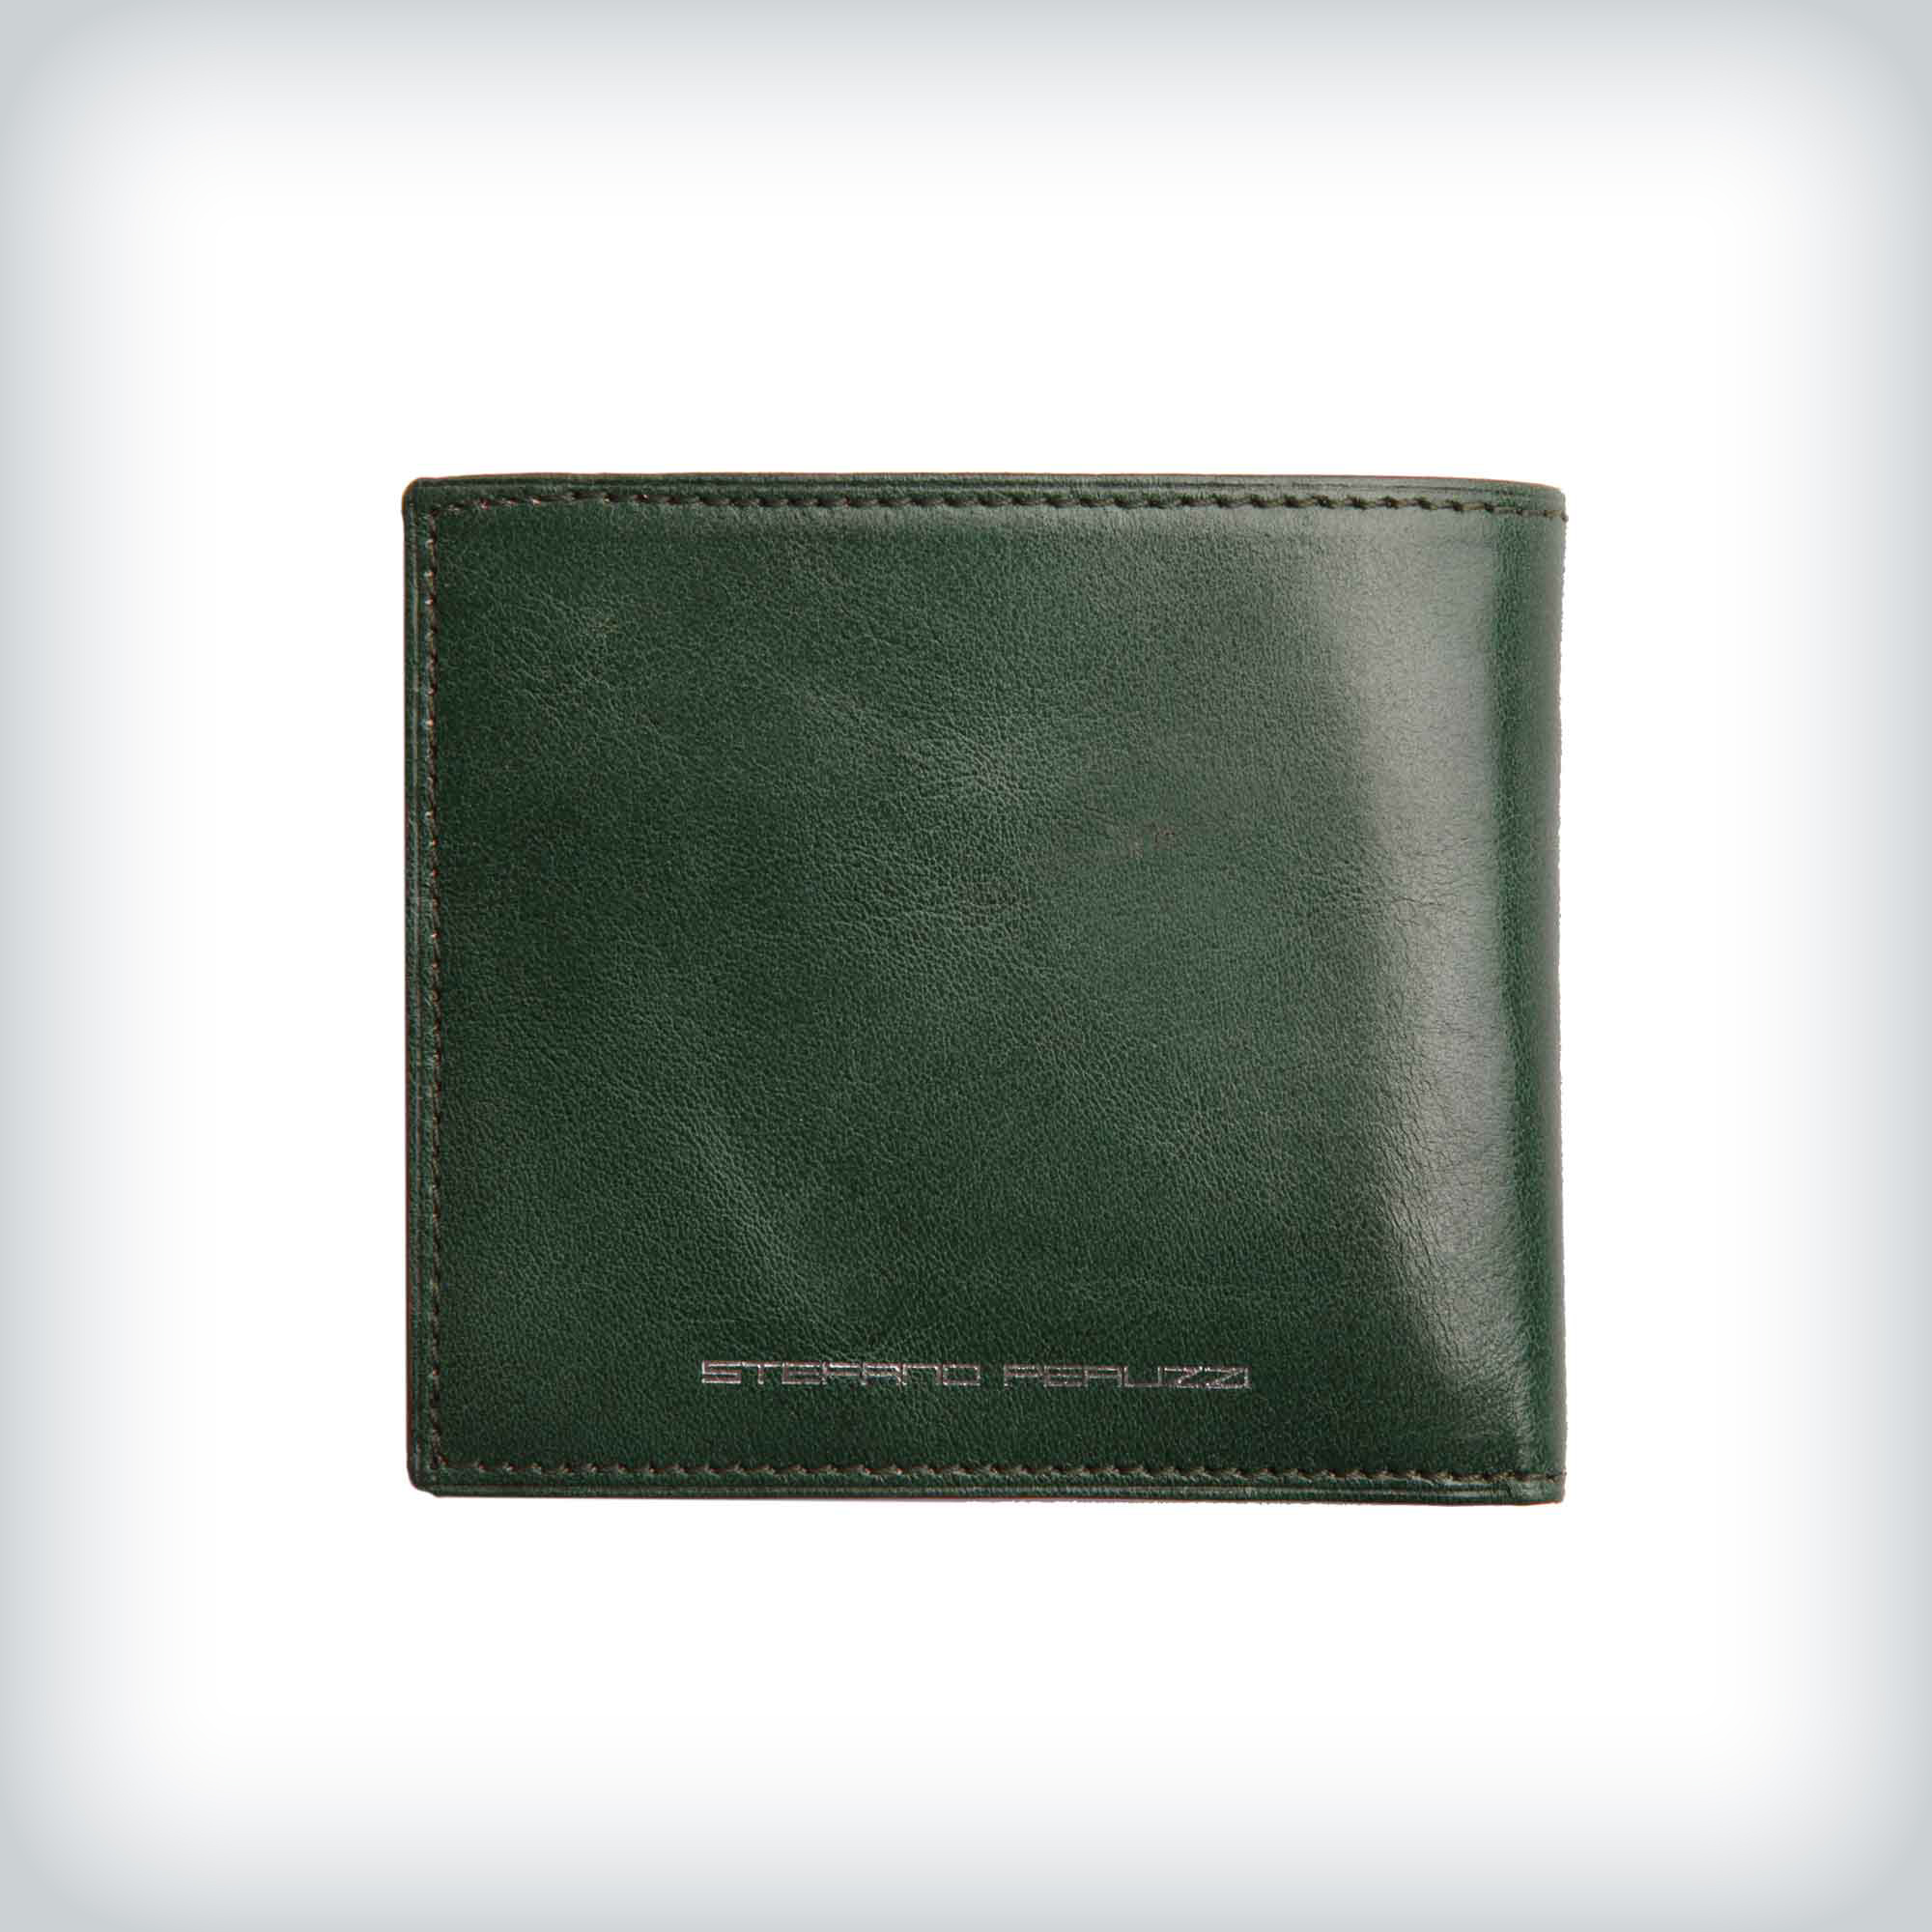 Billfold Leather Wallet "Stefano Peruzzi"